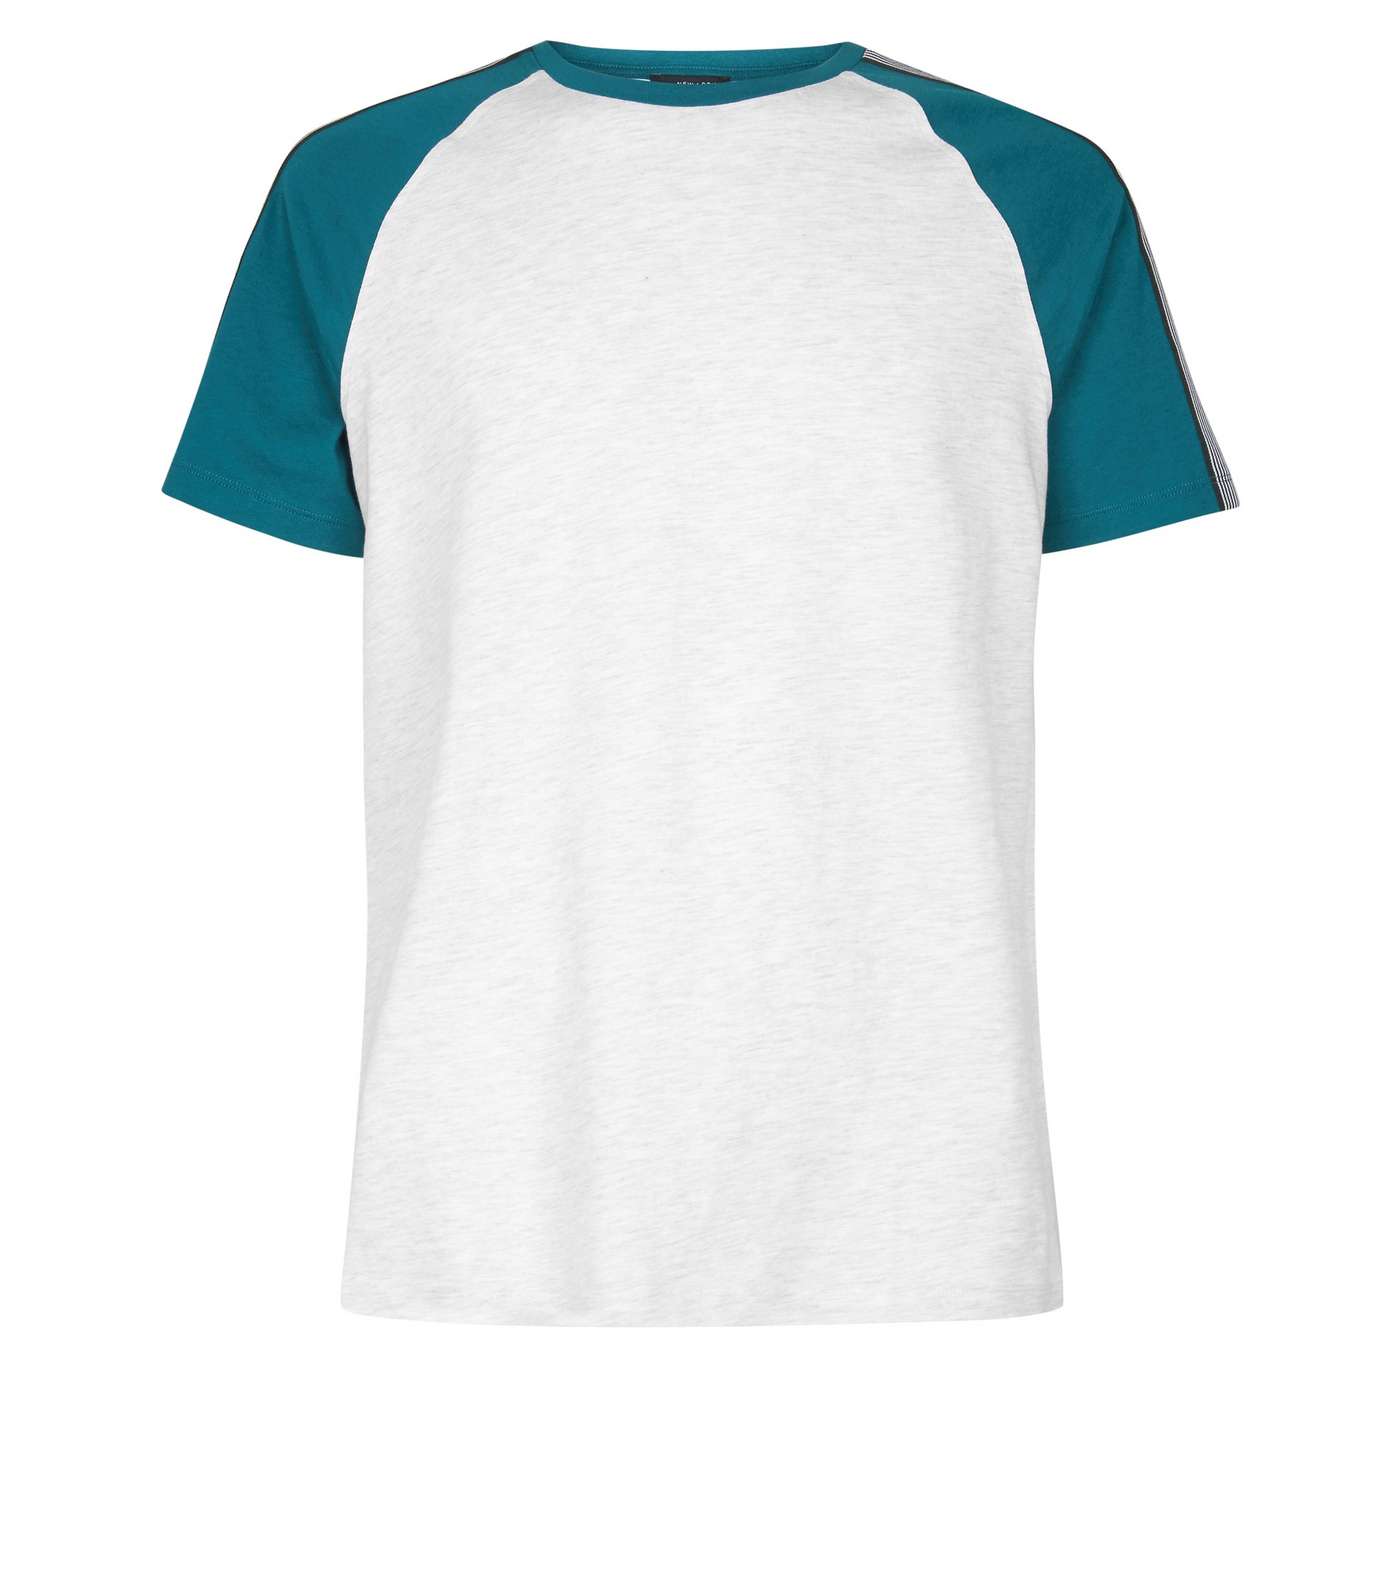 Teal Raglan Tape Sleeve T-Shirt Image 4